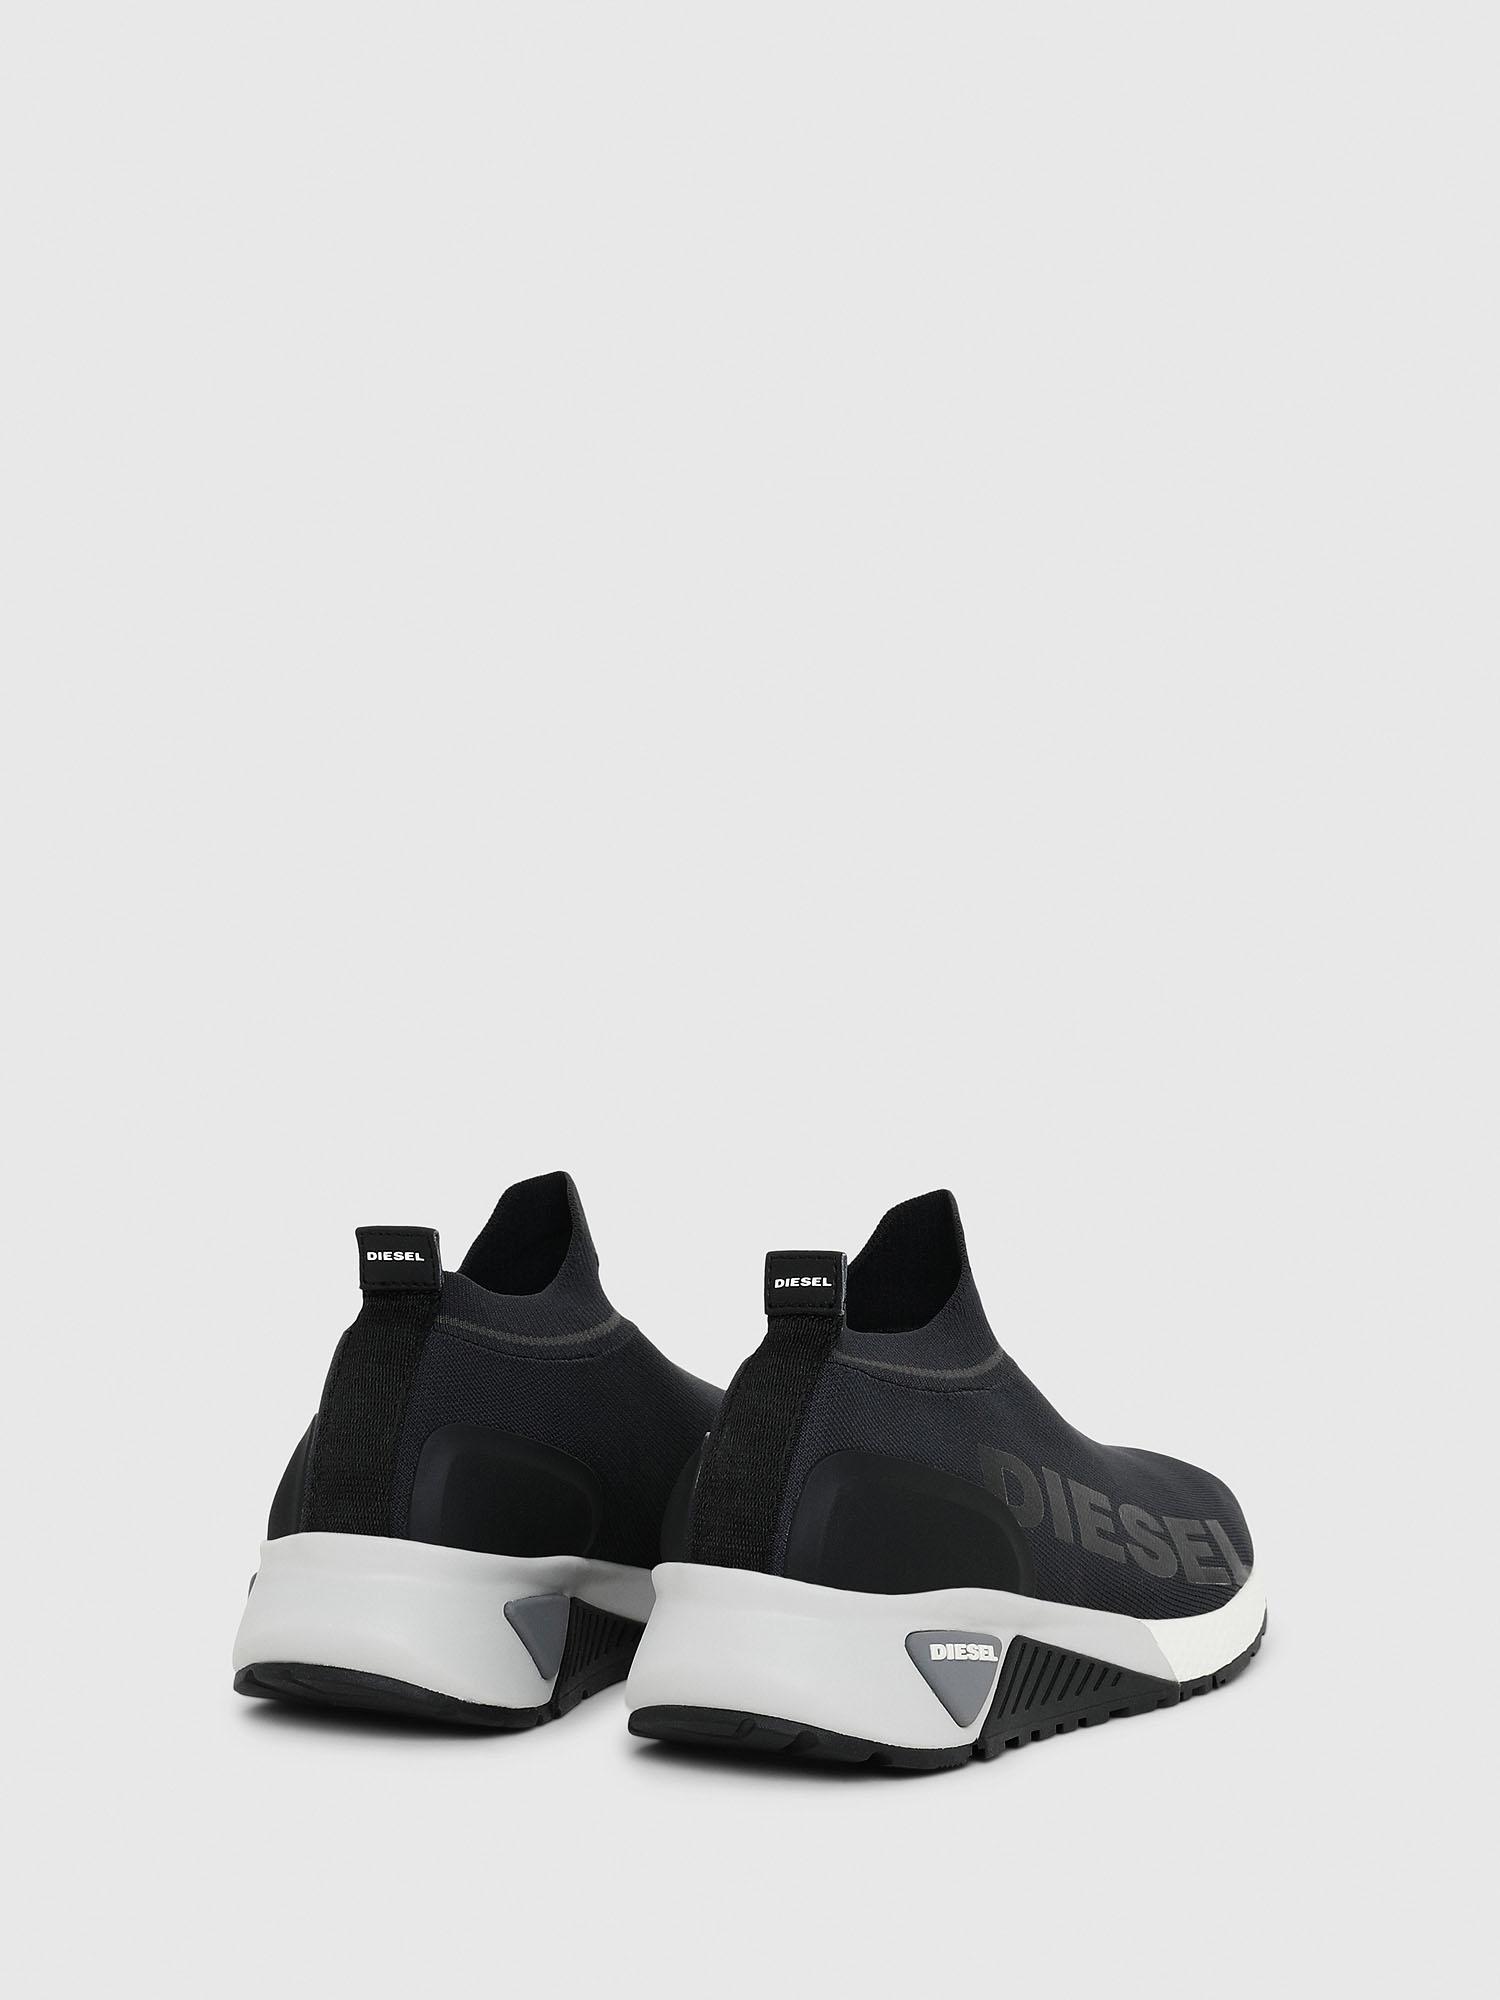 DIESEL Sock Sneakers With Shiny Logo in Black for Men - Lyst